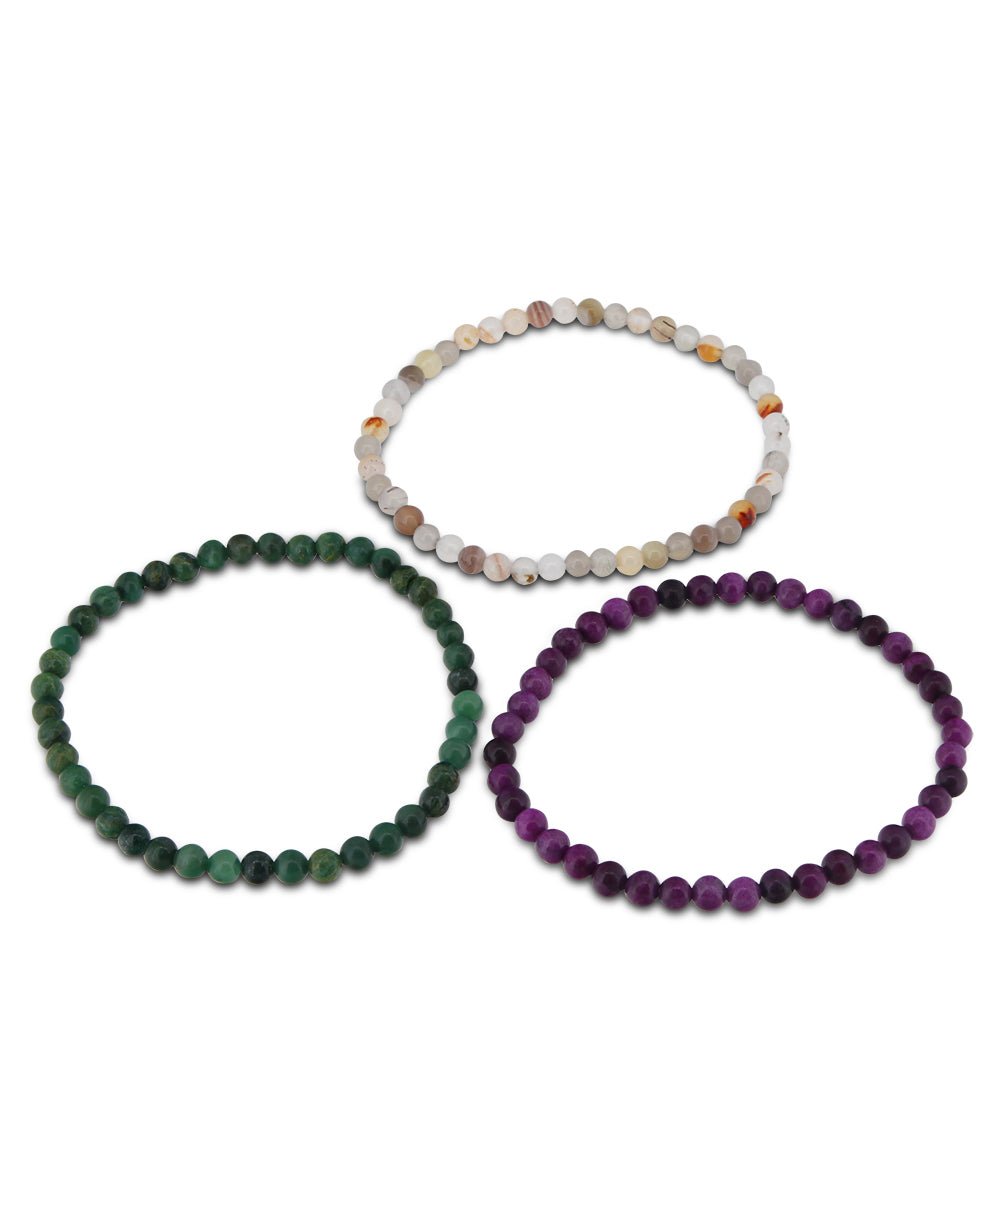 Energy Bracelets for Positive Attitude and Change, Set of 3 - Bracelets